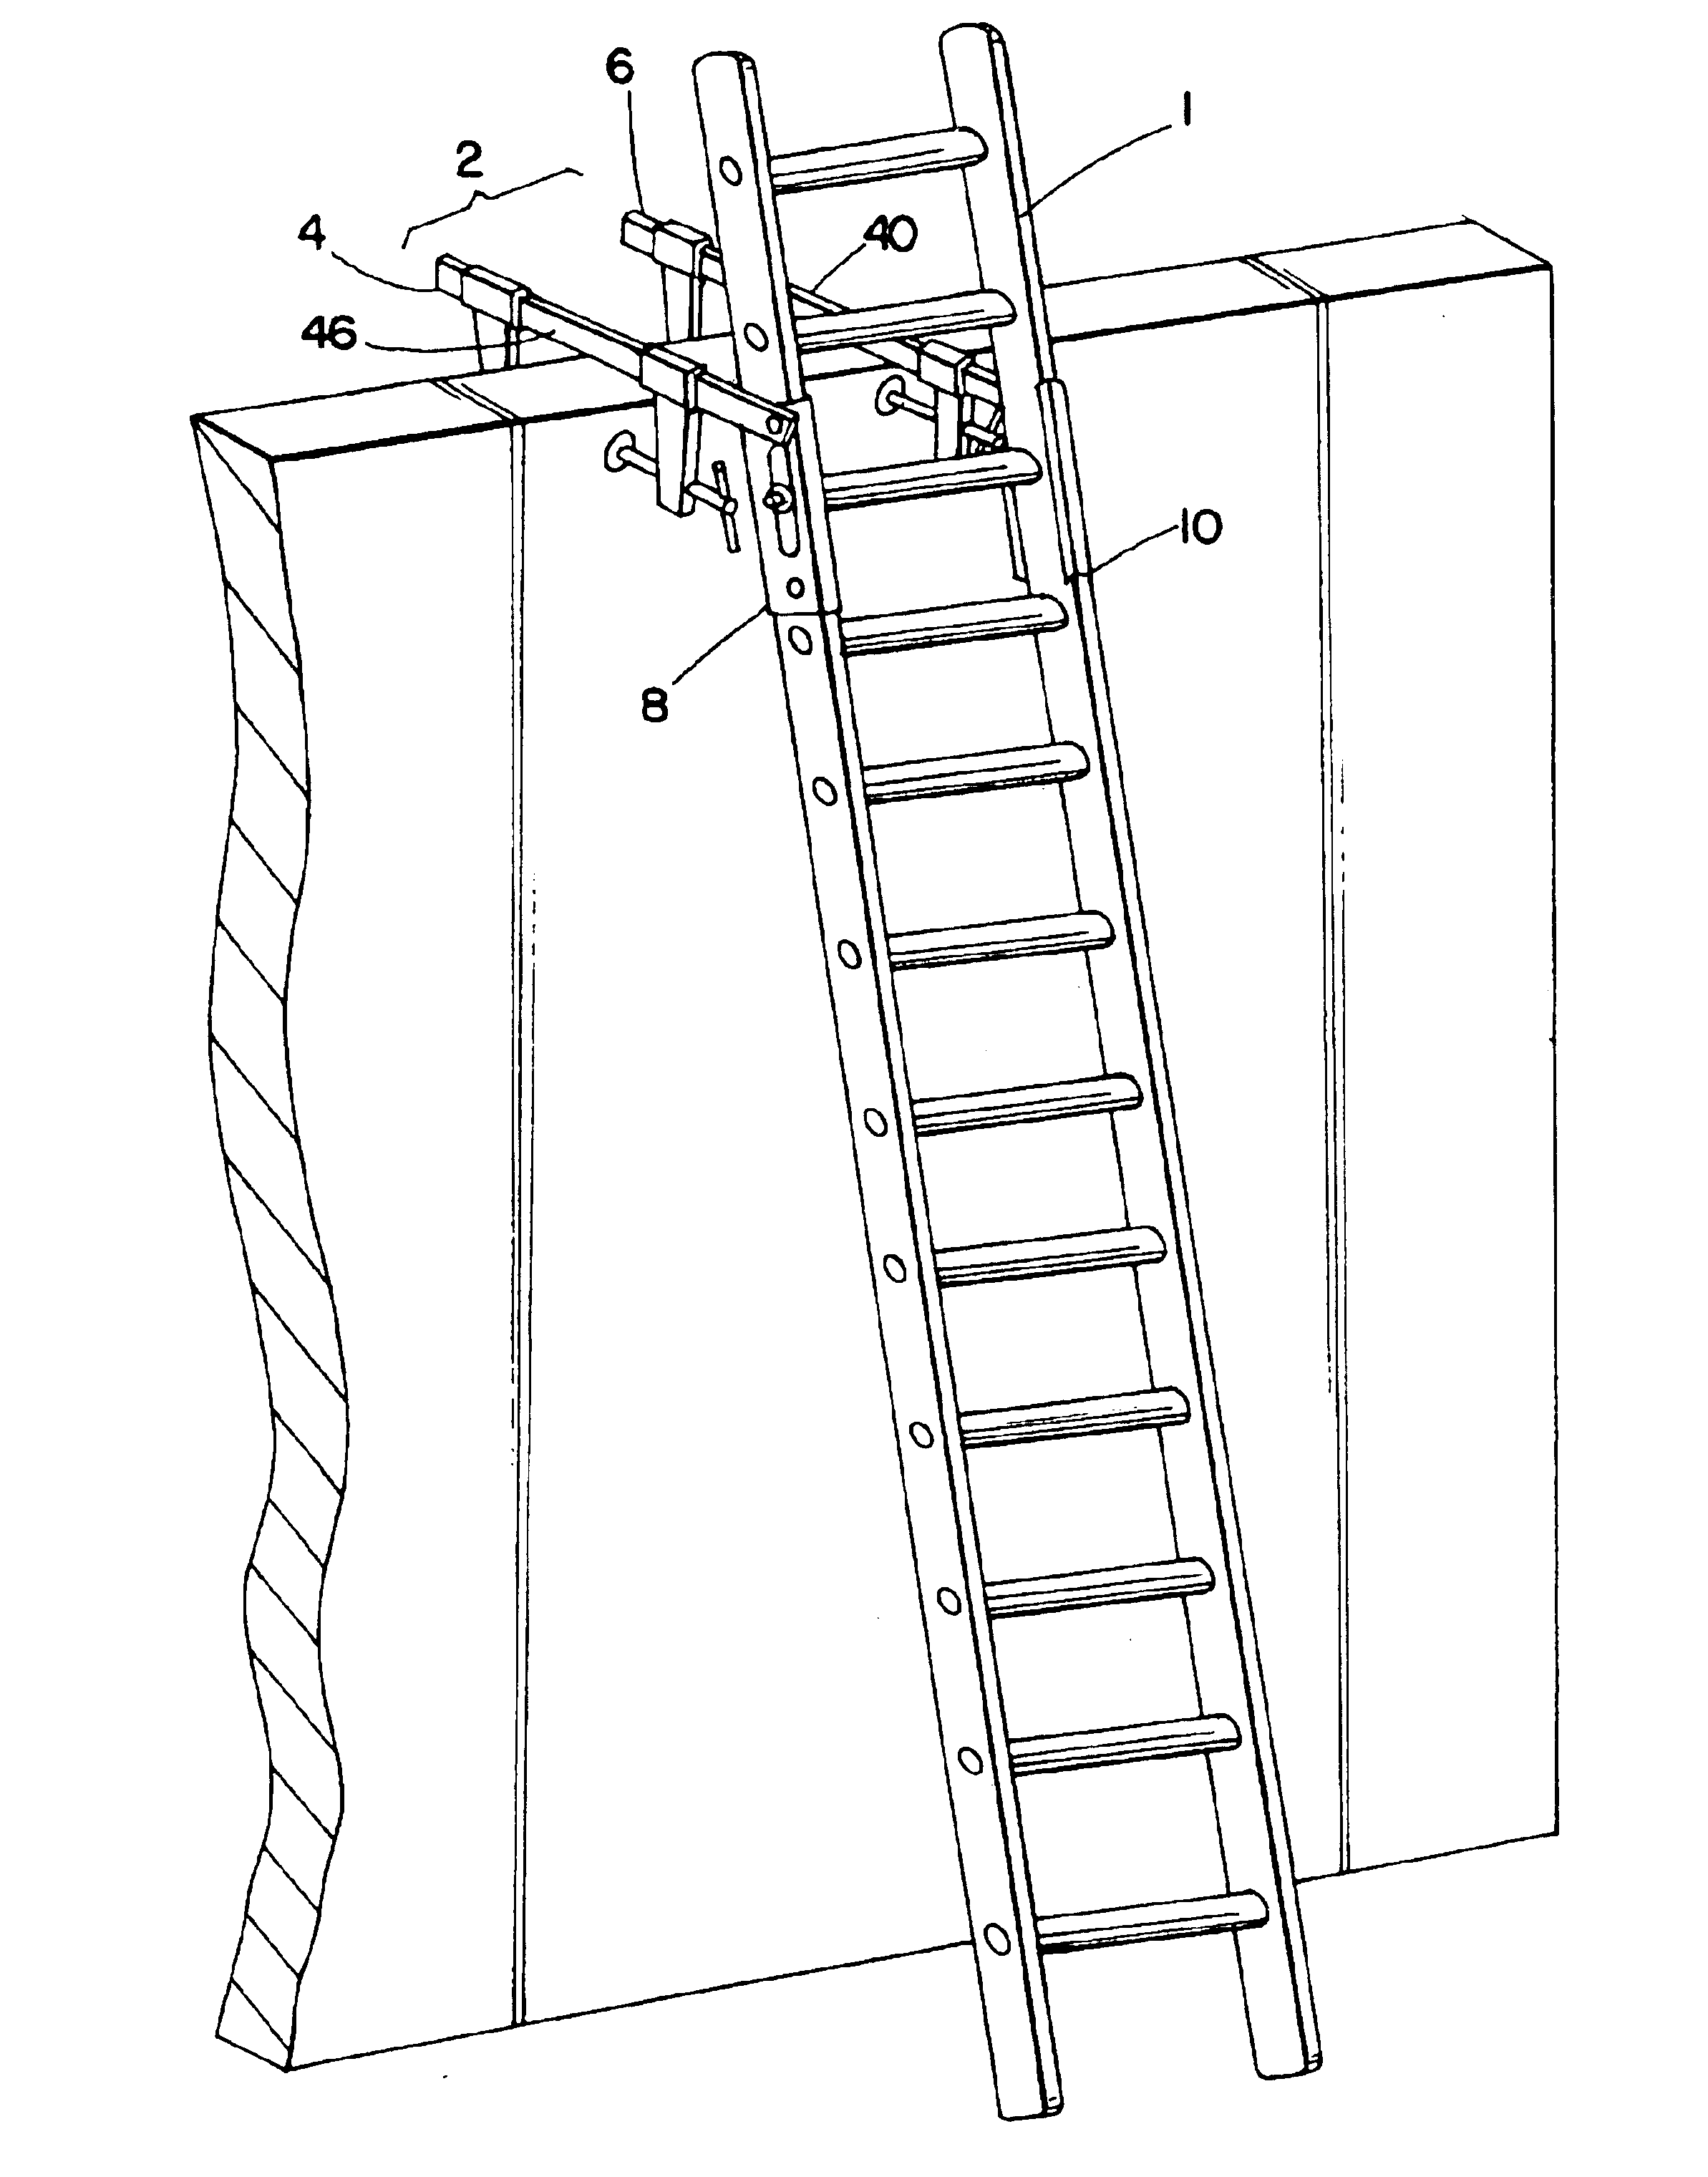 Ladder safety device